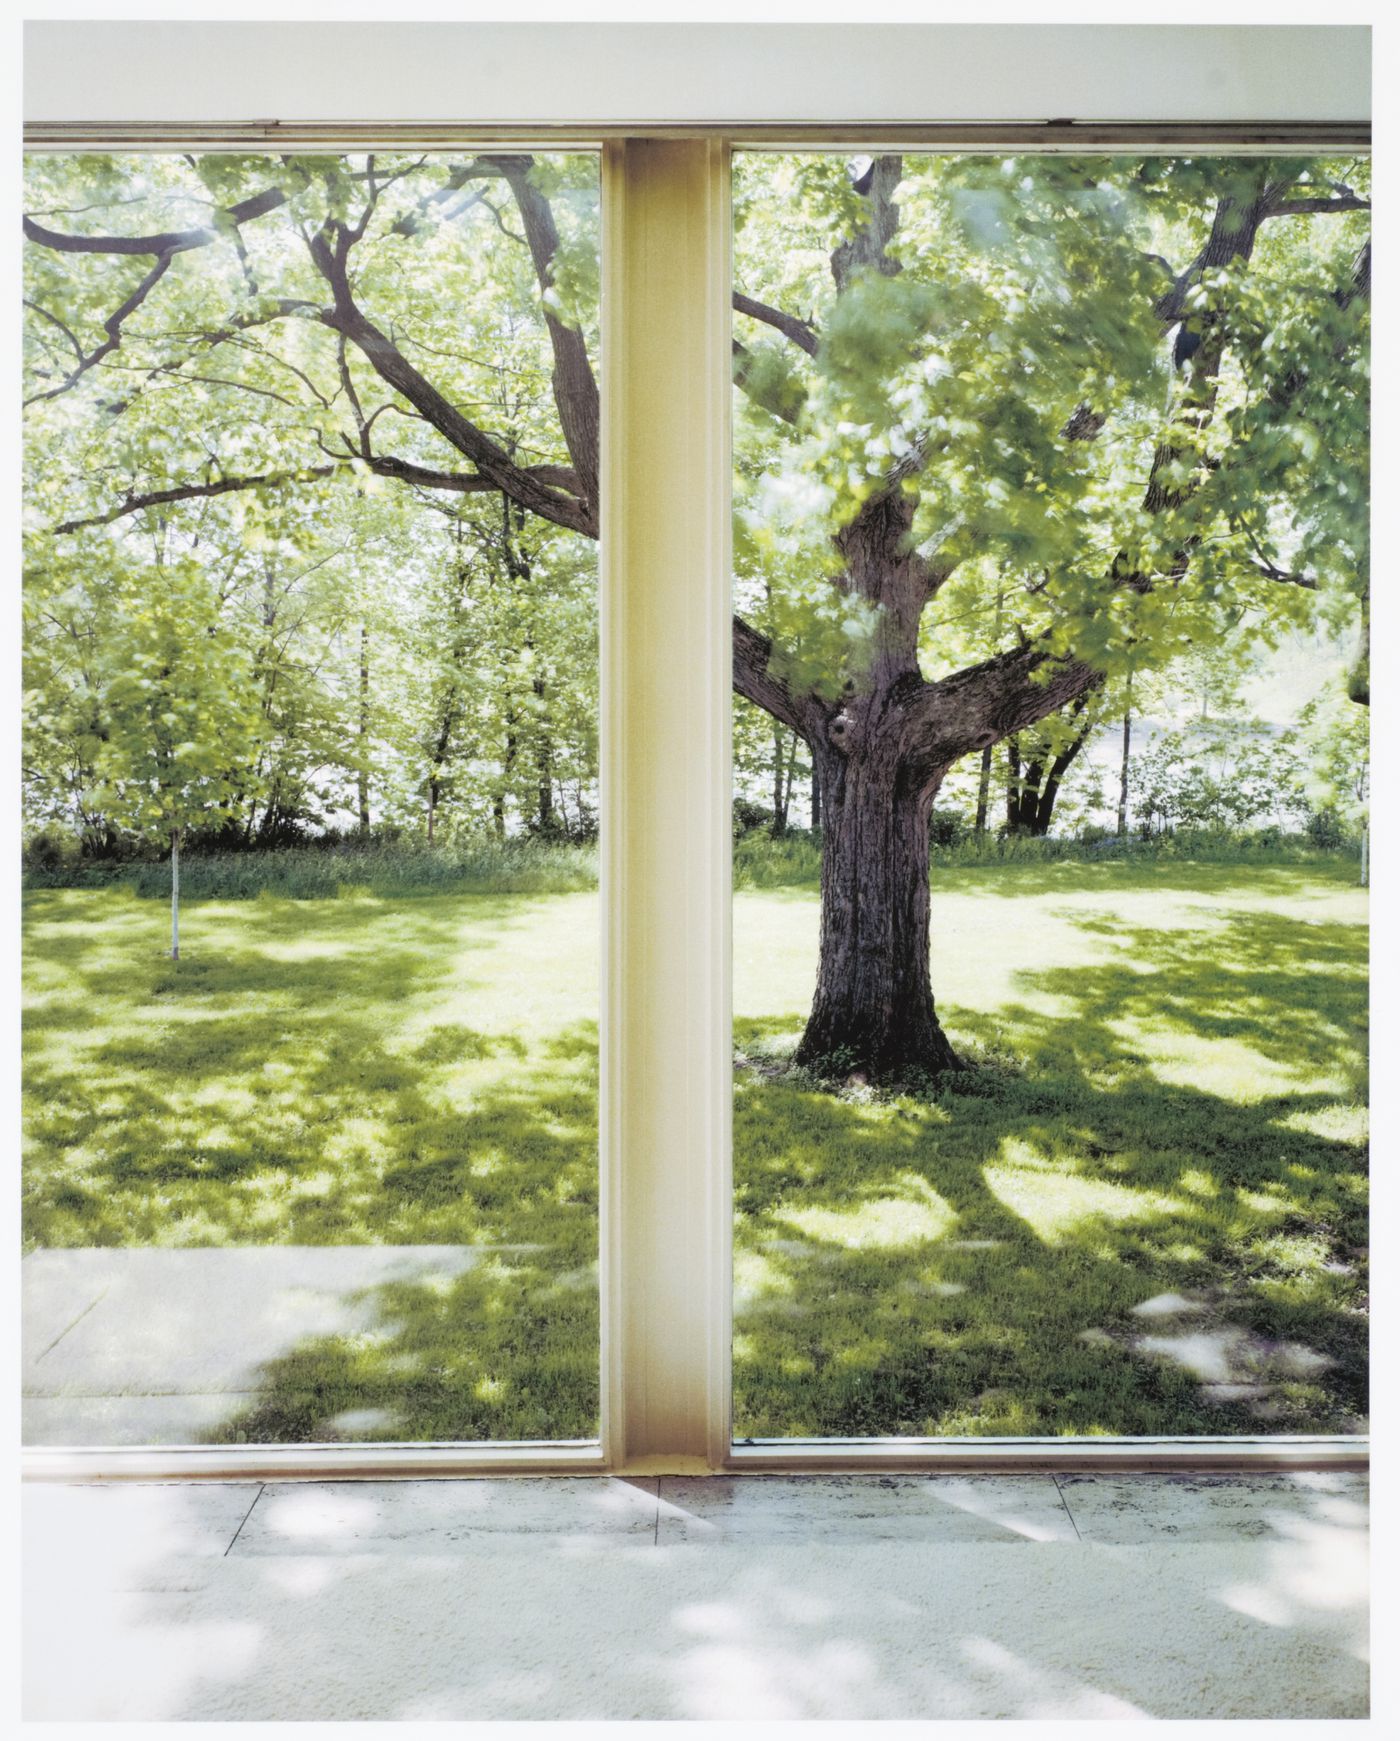 Farnsworth House, Plano, Illinois: the linden tree